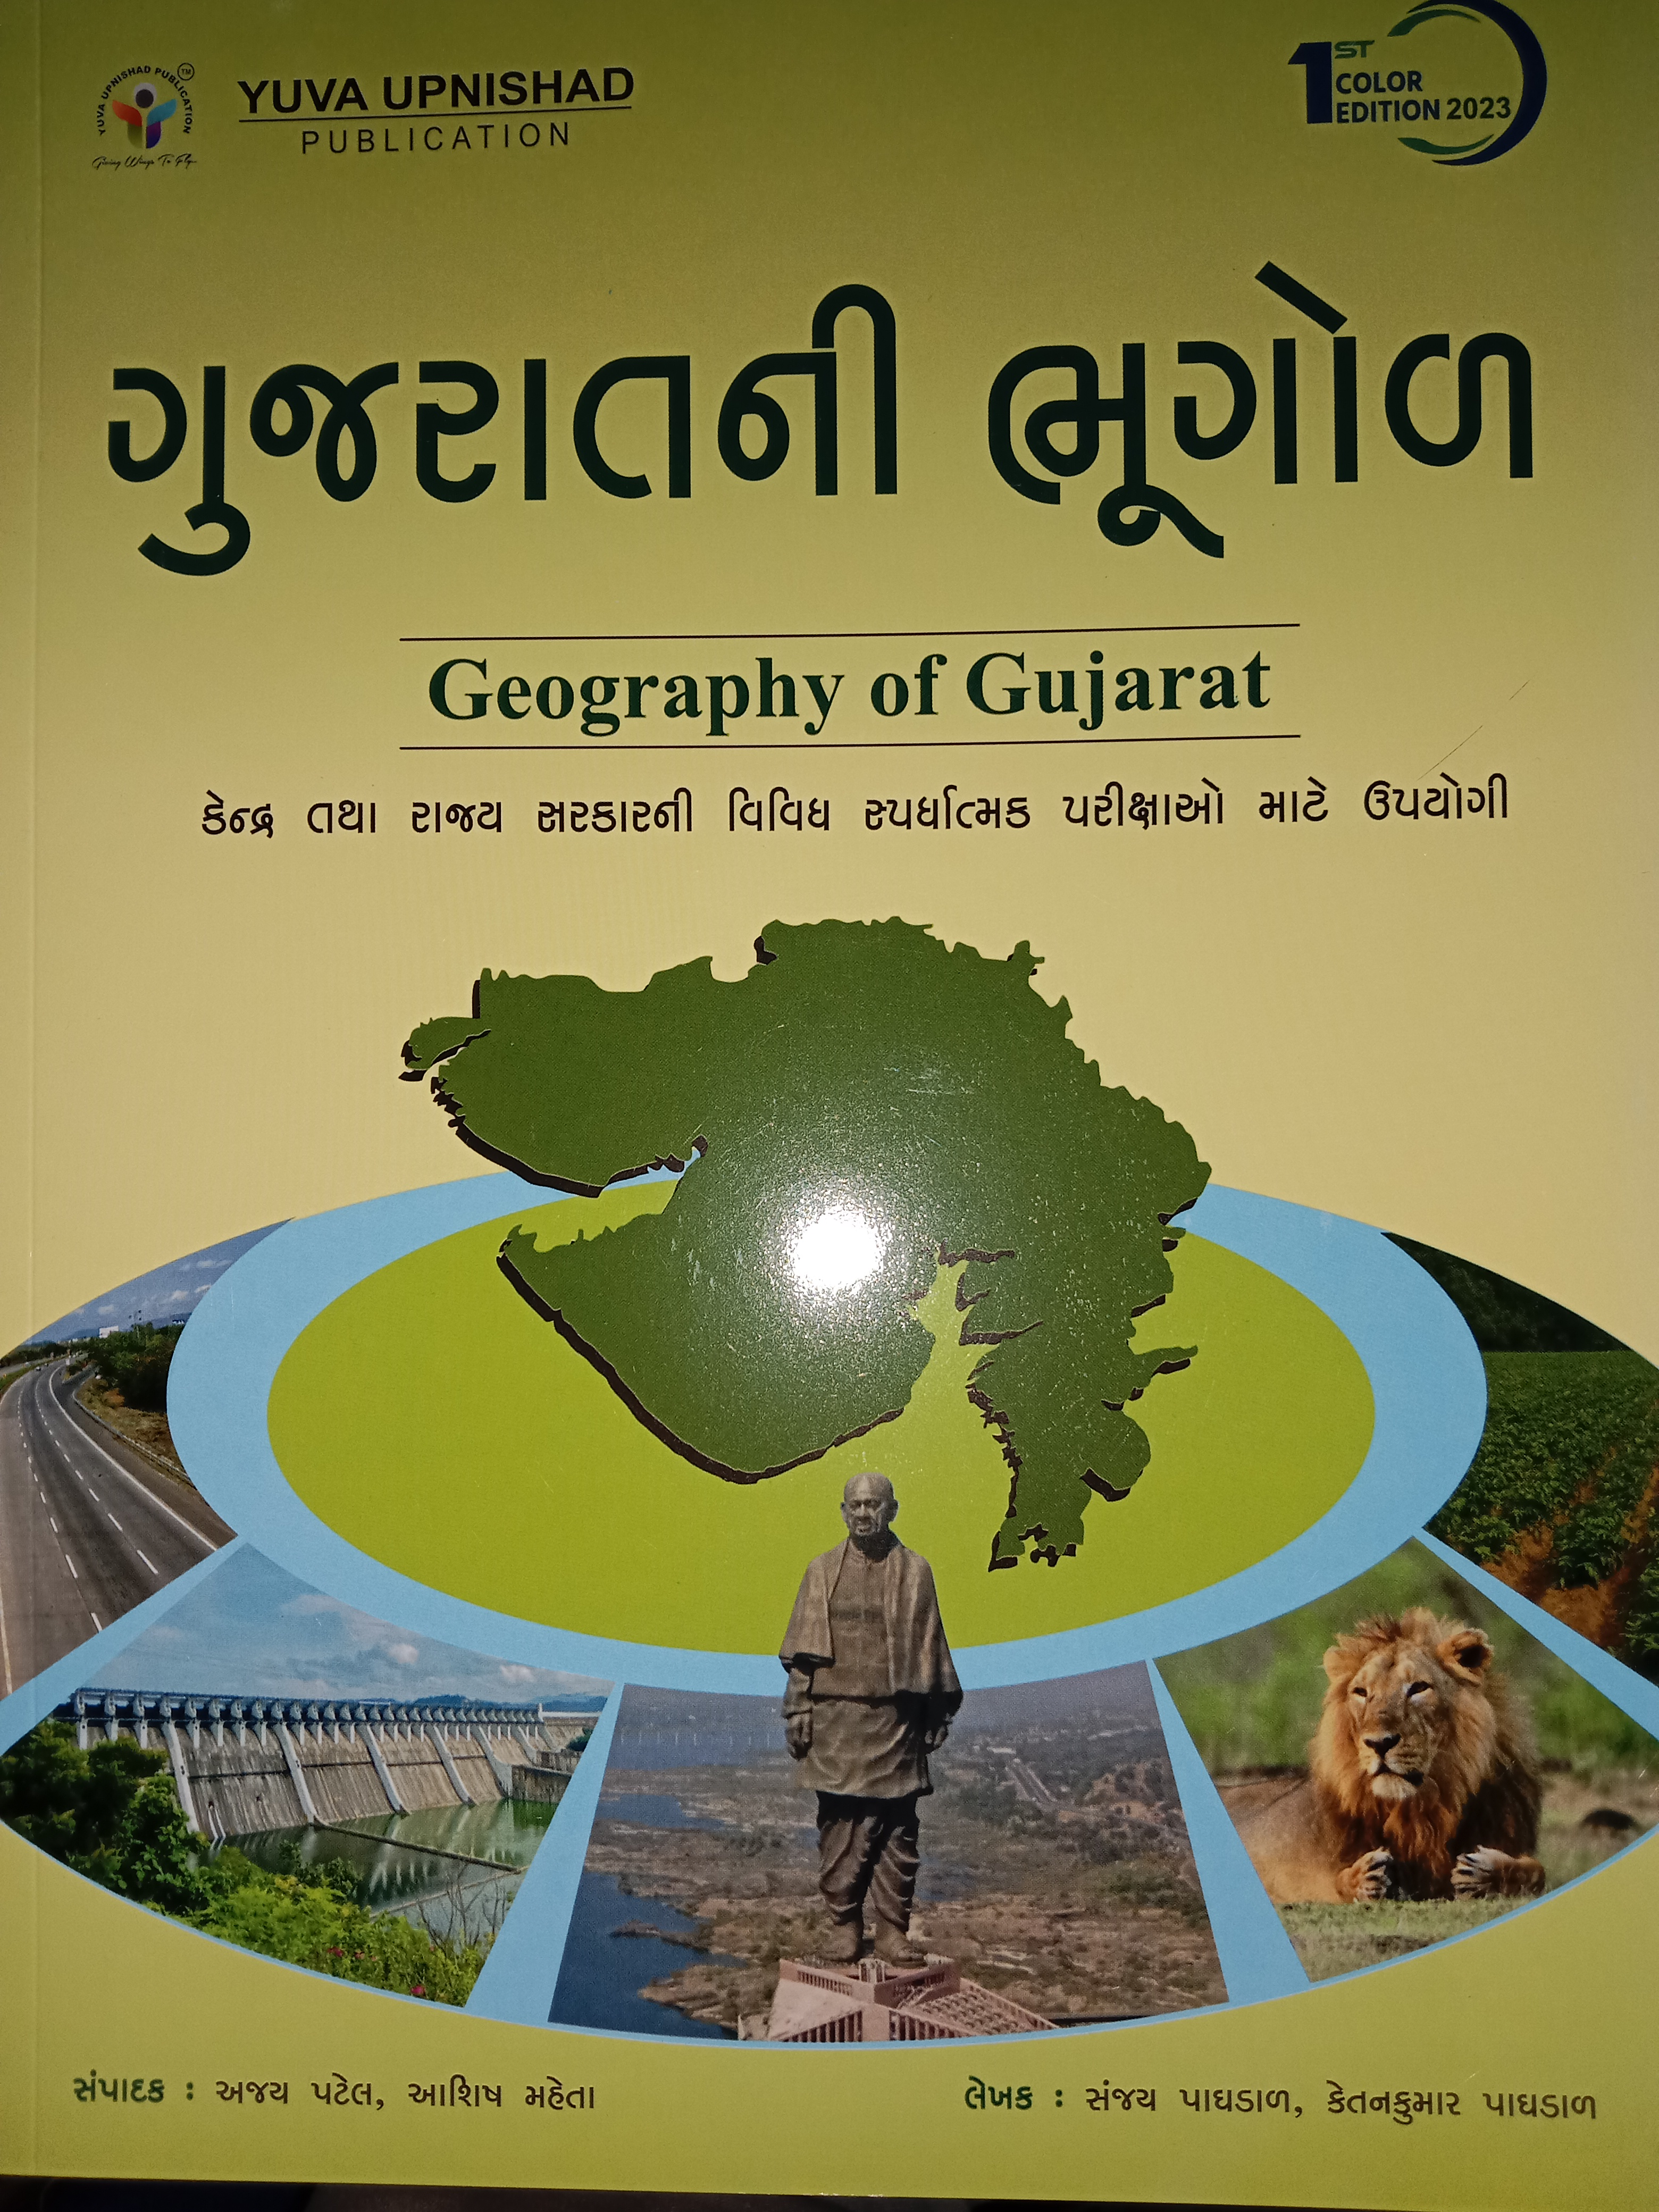 Geogrraphy Of Gujarat, 1 Color,- 2023